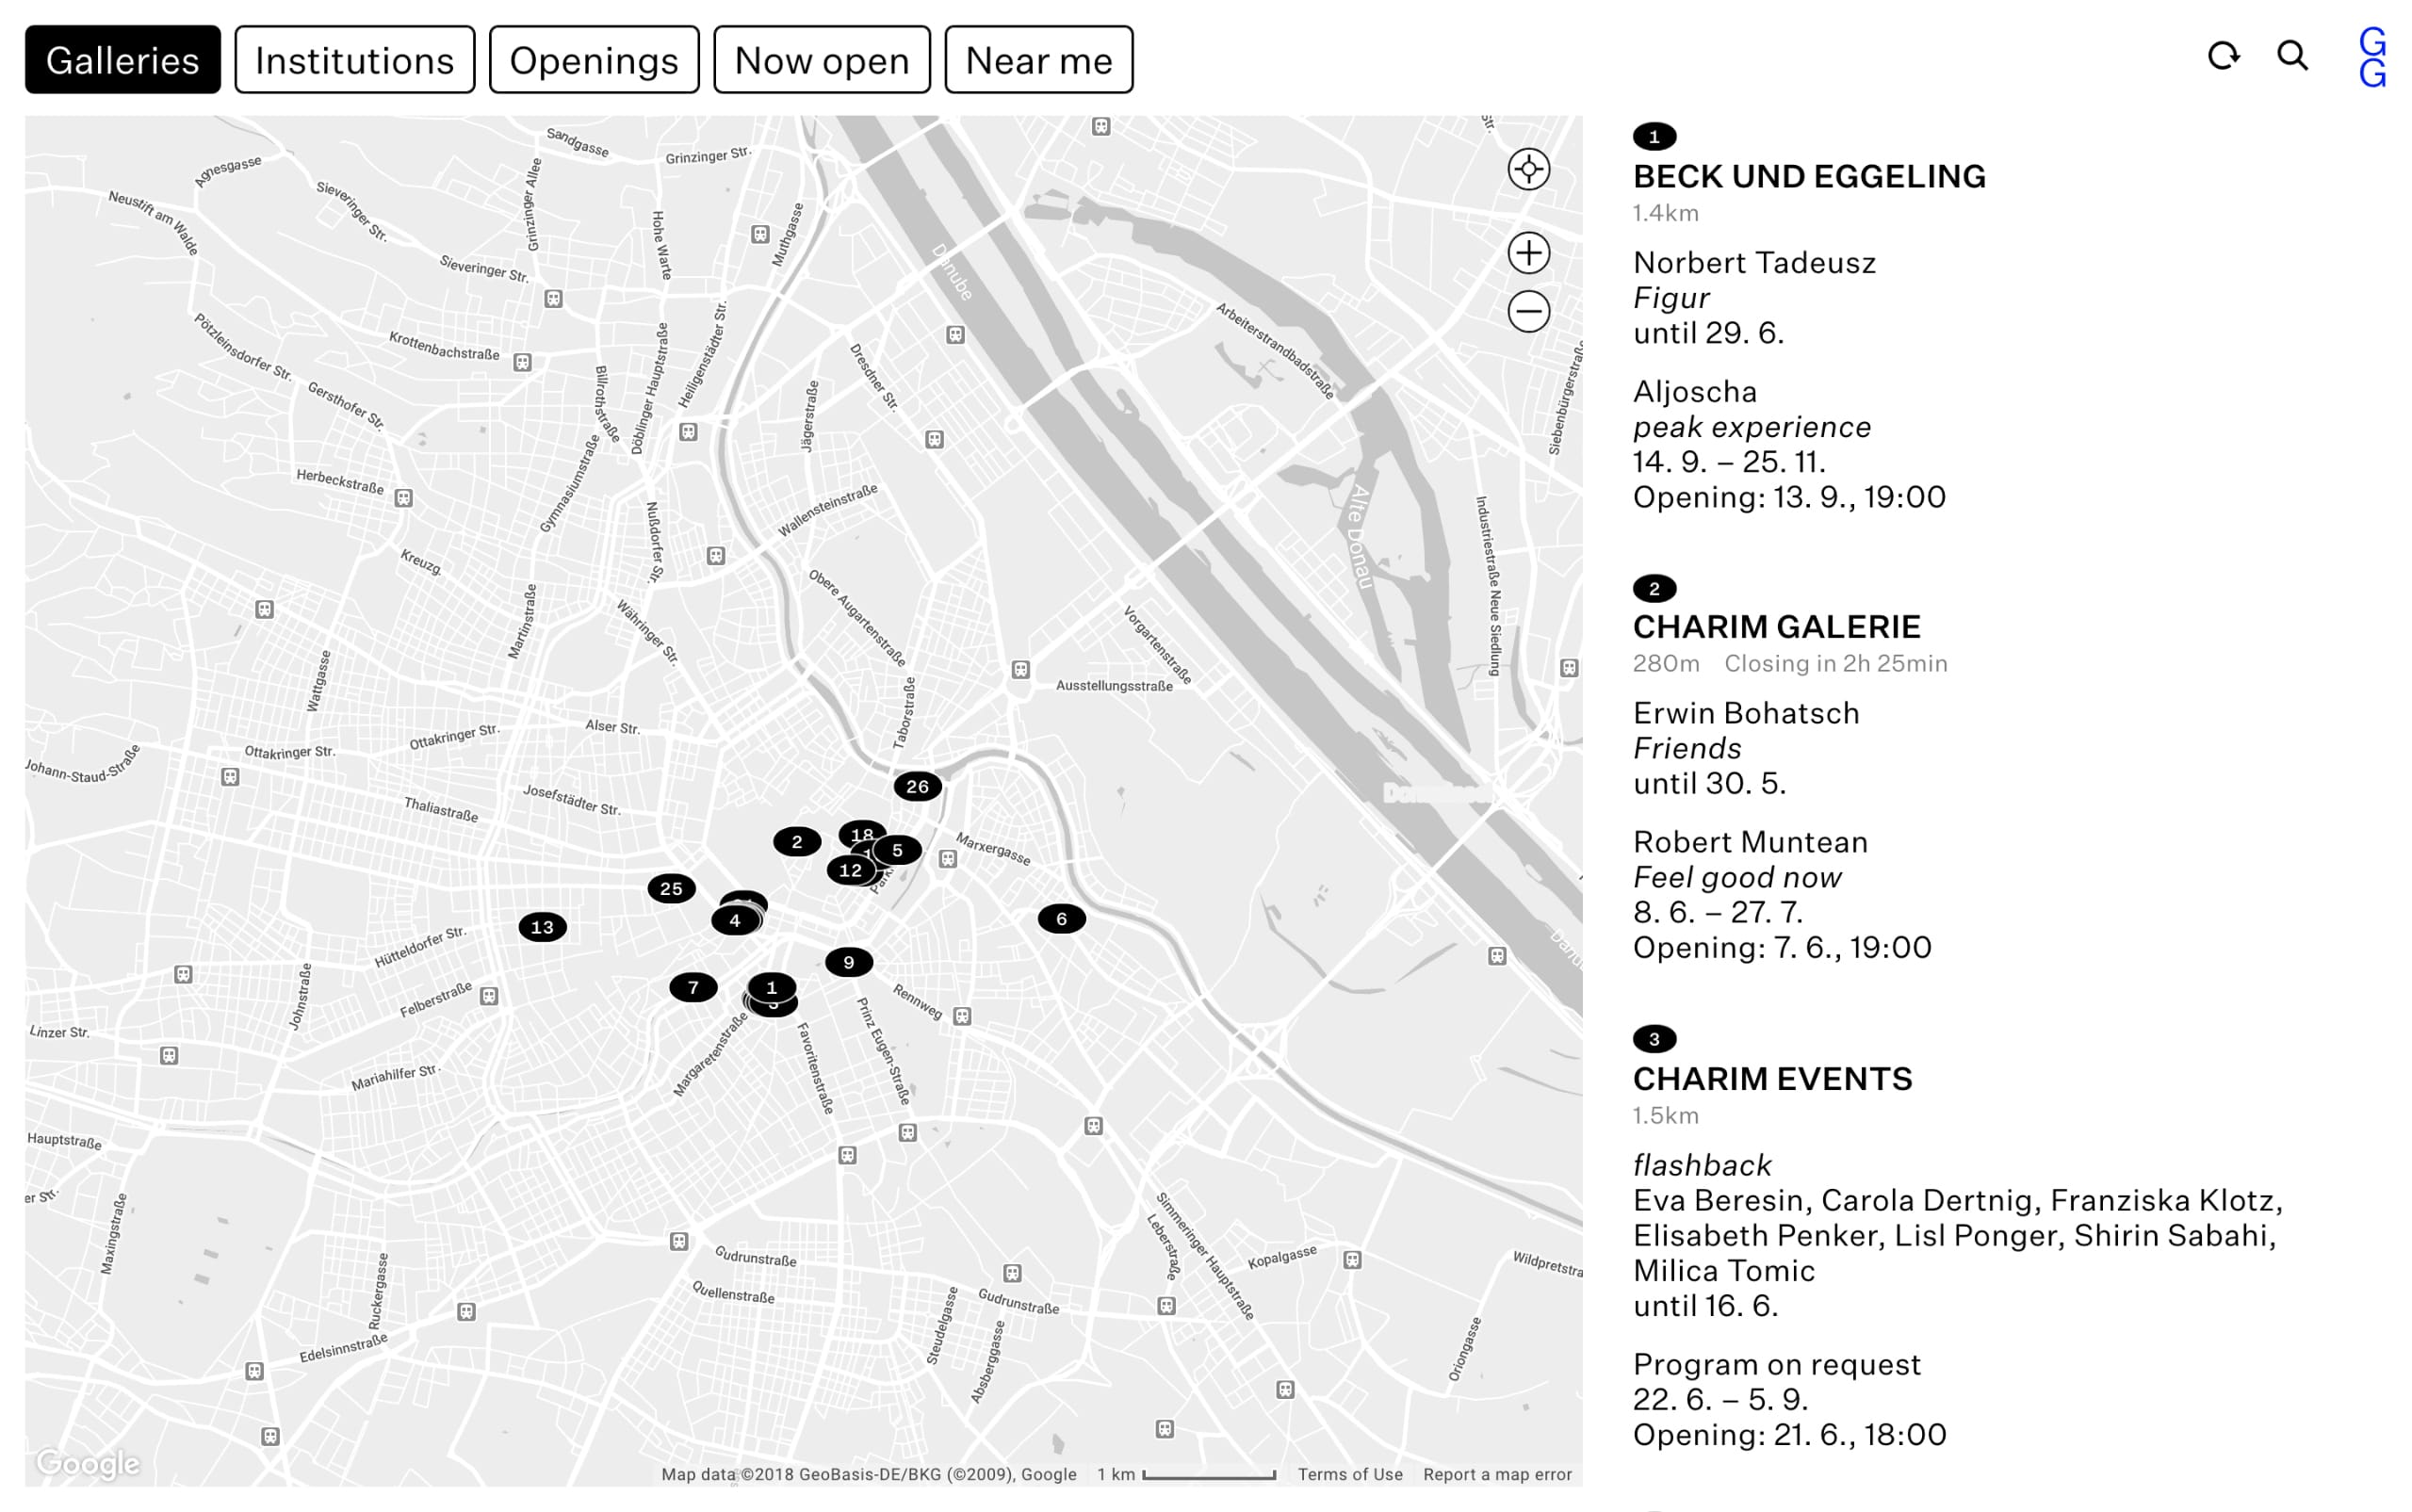 Gallery Guide Vienna Website Screenshot